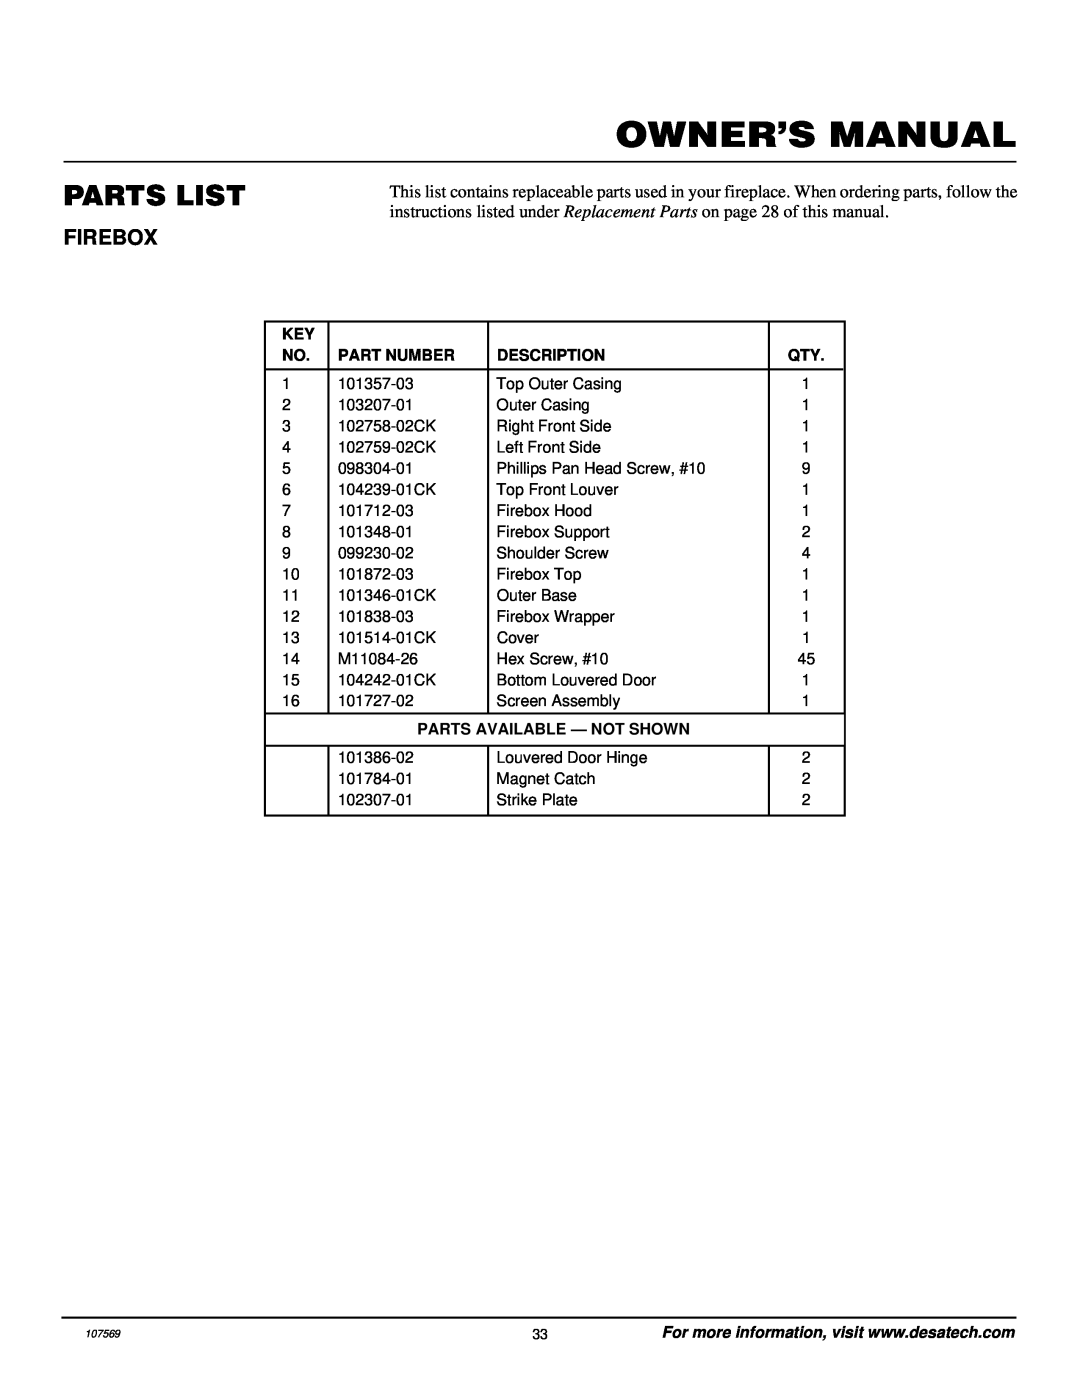 Desa CGEFP33NR installation manual Parts List, Firebox, Part Number, Description, Parts Available - Not Shown 